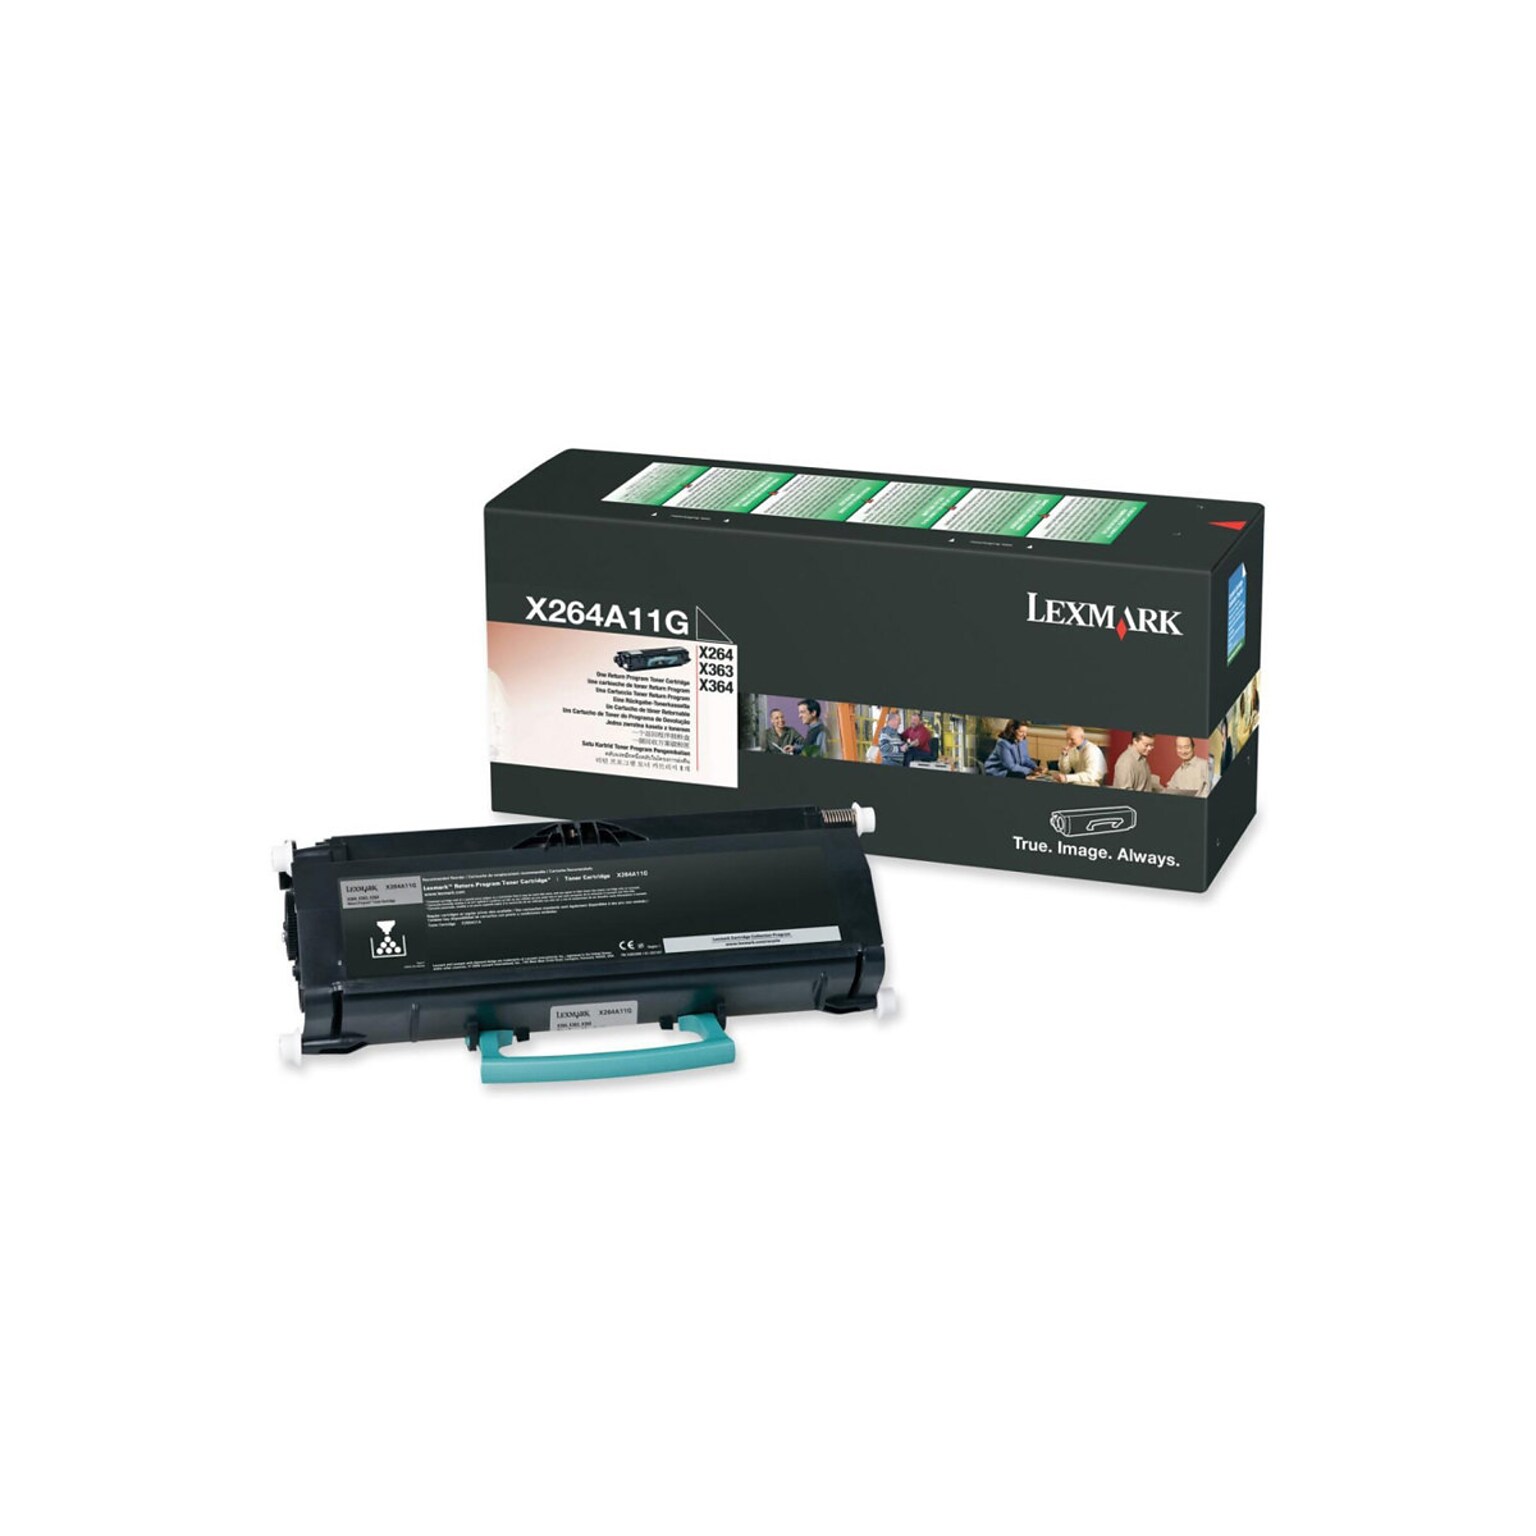 Lexmark X264 Black Standard Yield Toner Cartridge (X264A11G)